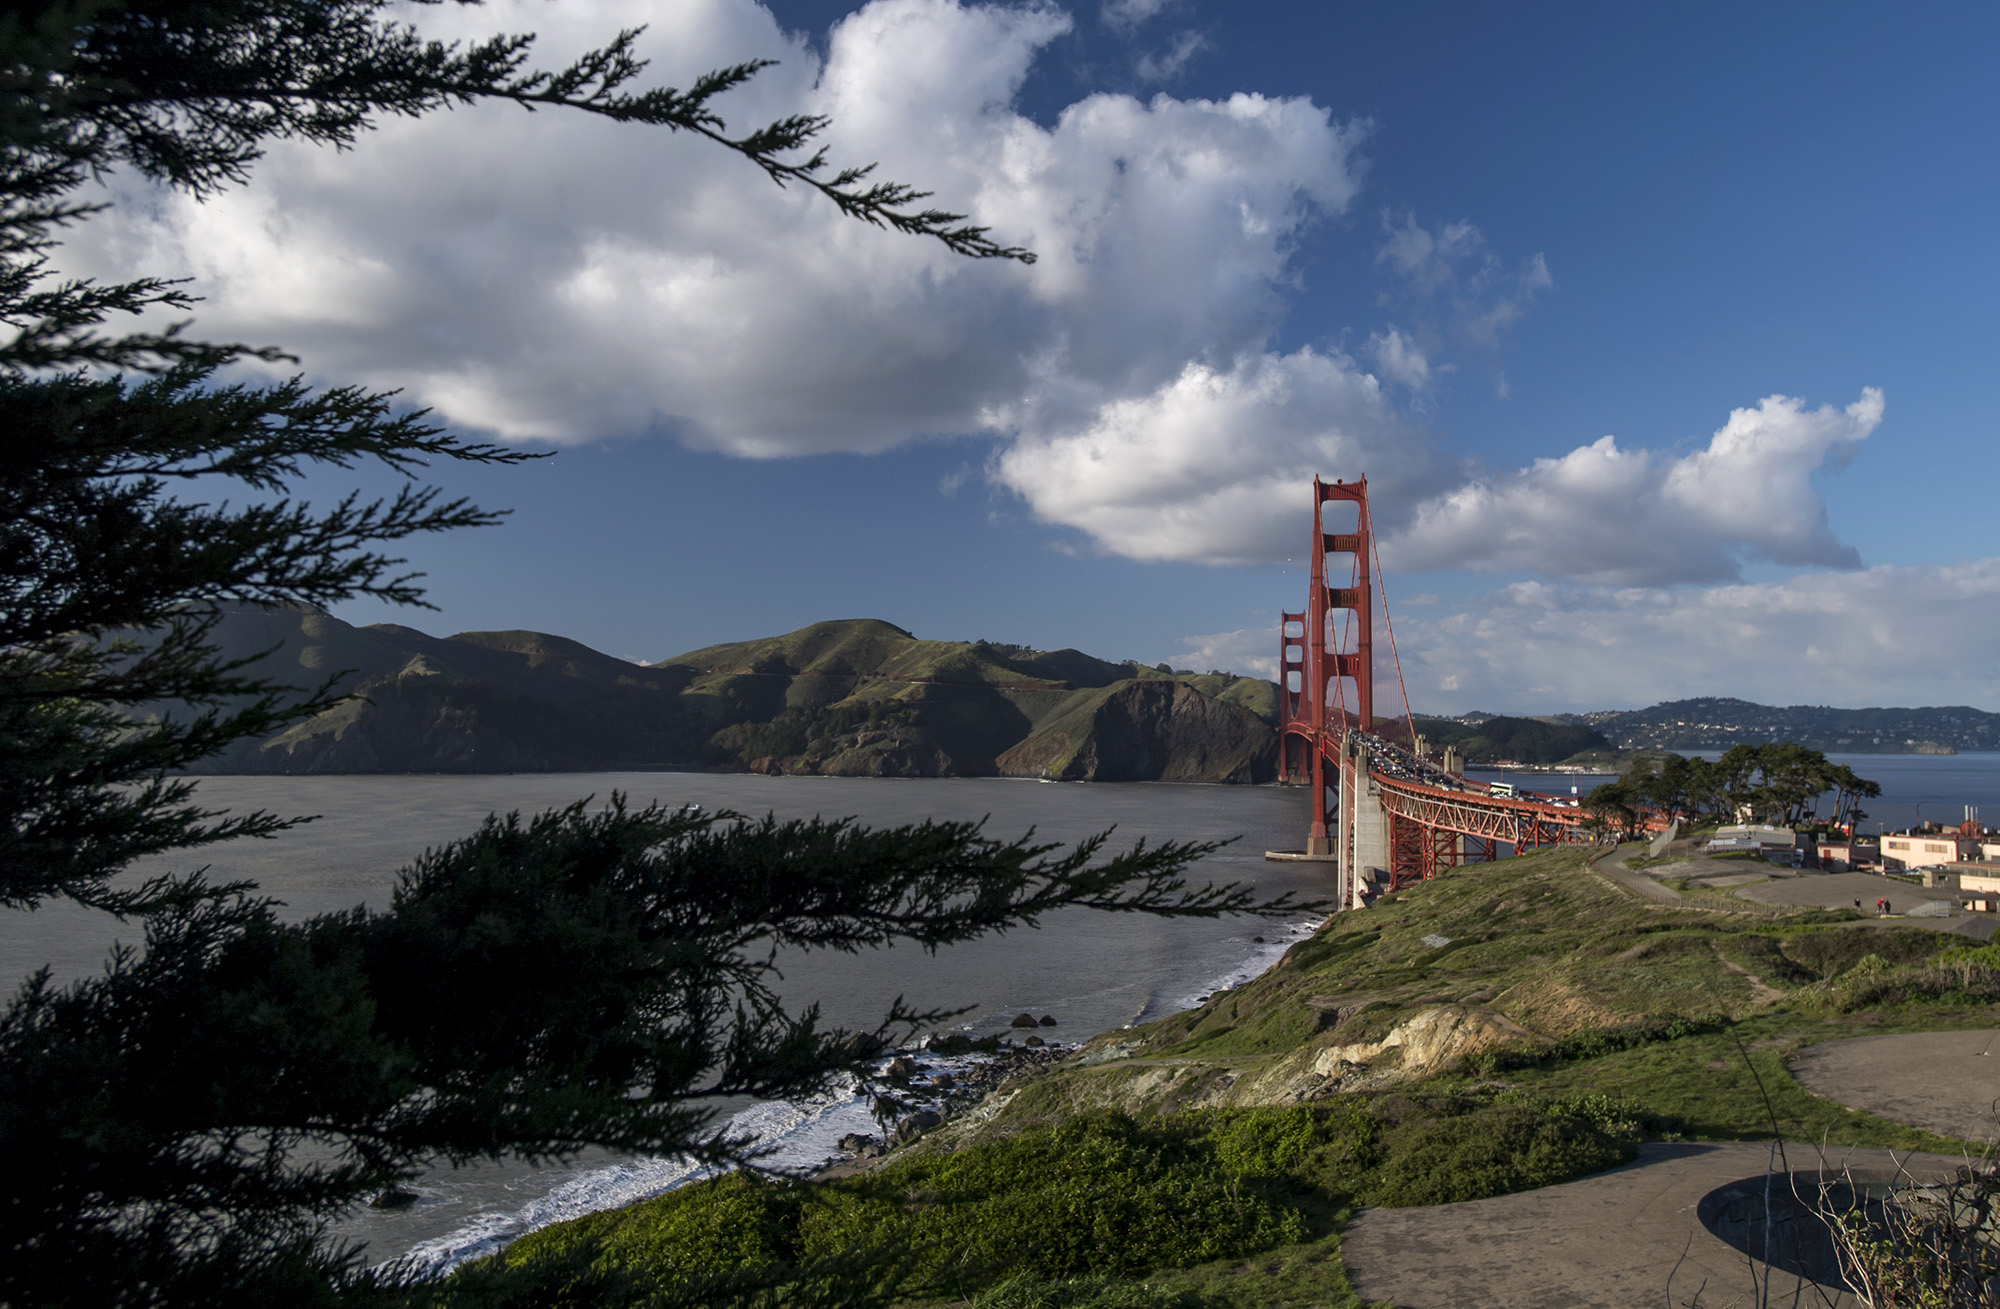 The Golden Gate Bridge stands in San Francisco.